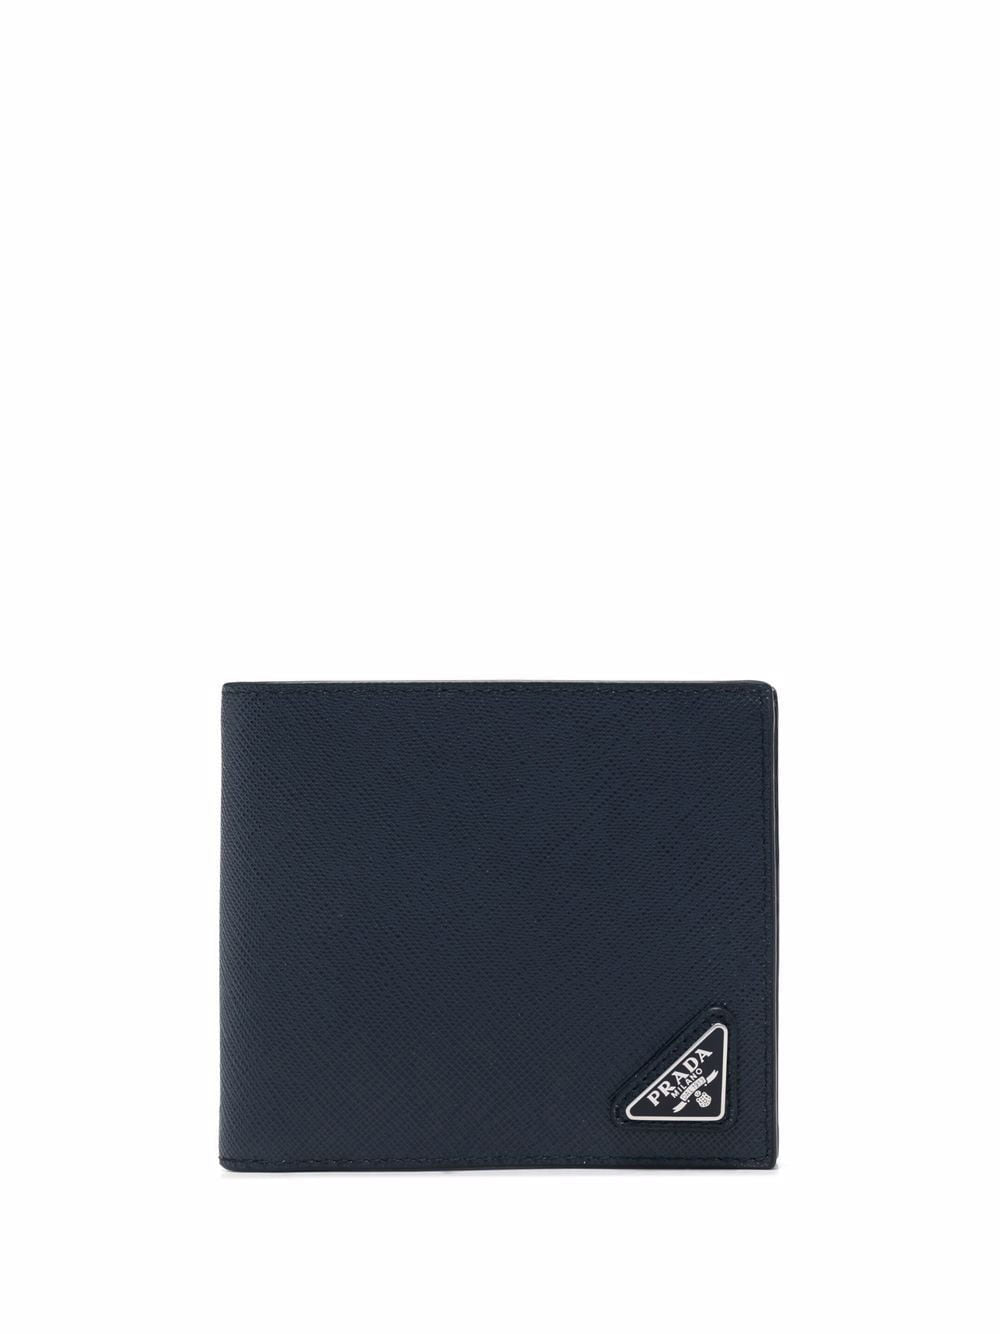 Bi-fold wallet in Baltic blue Saffiano leather